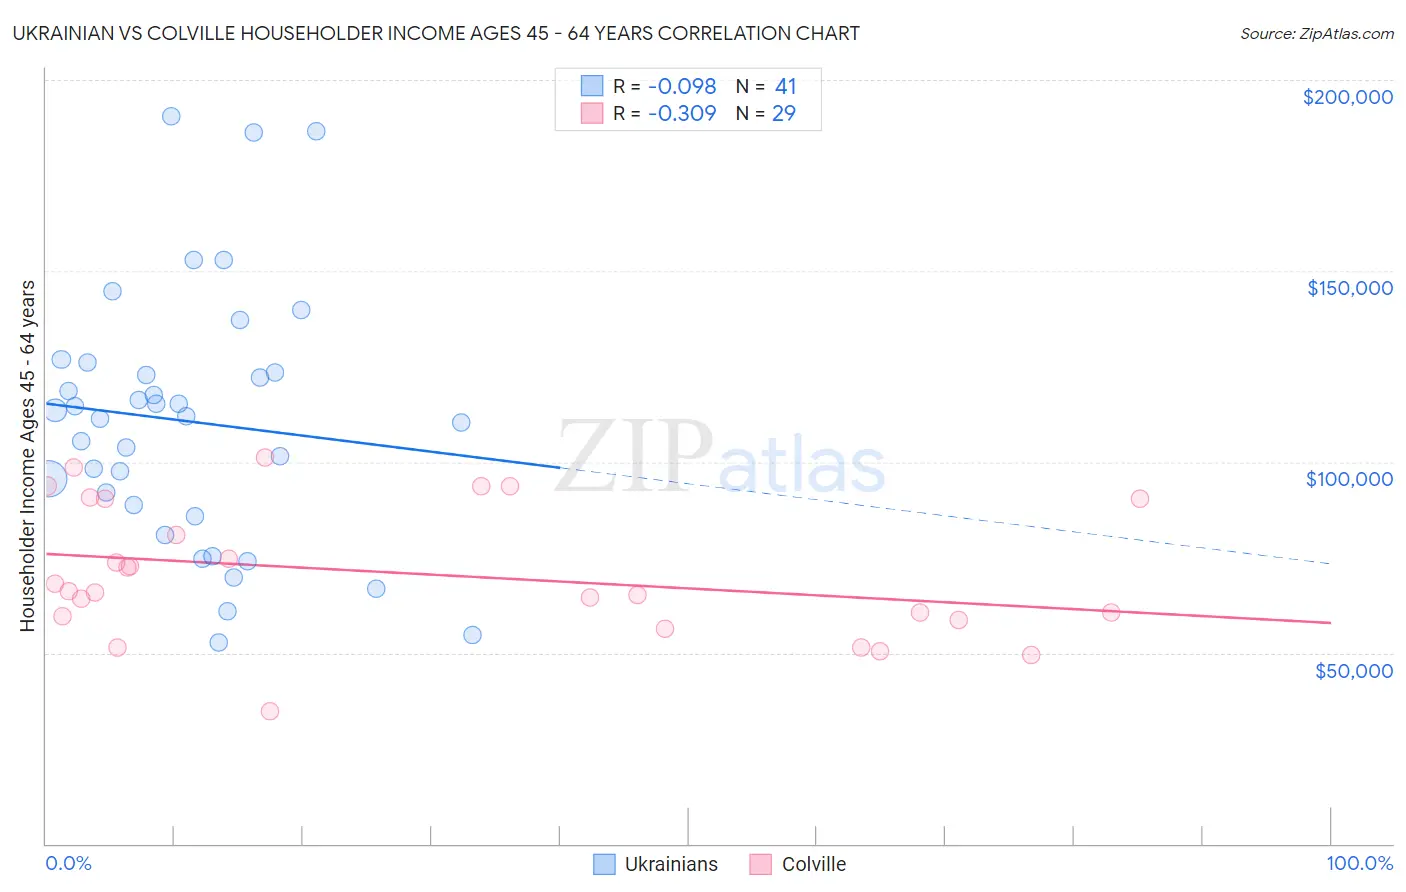 Ukrainian vs Colville Householder Income Ages 45 - 64 years